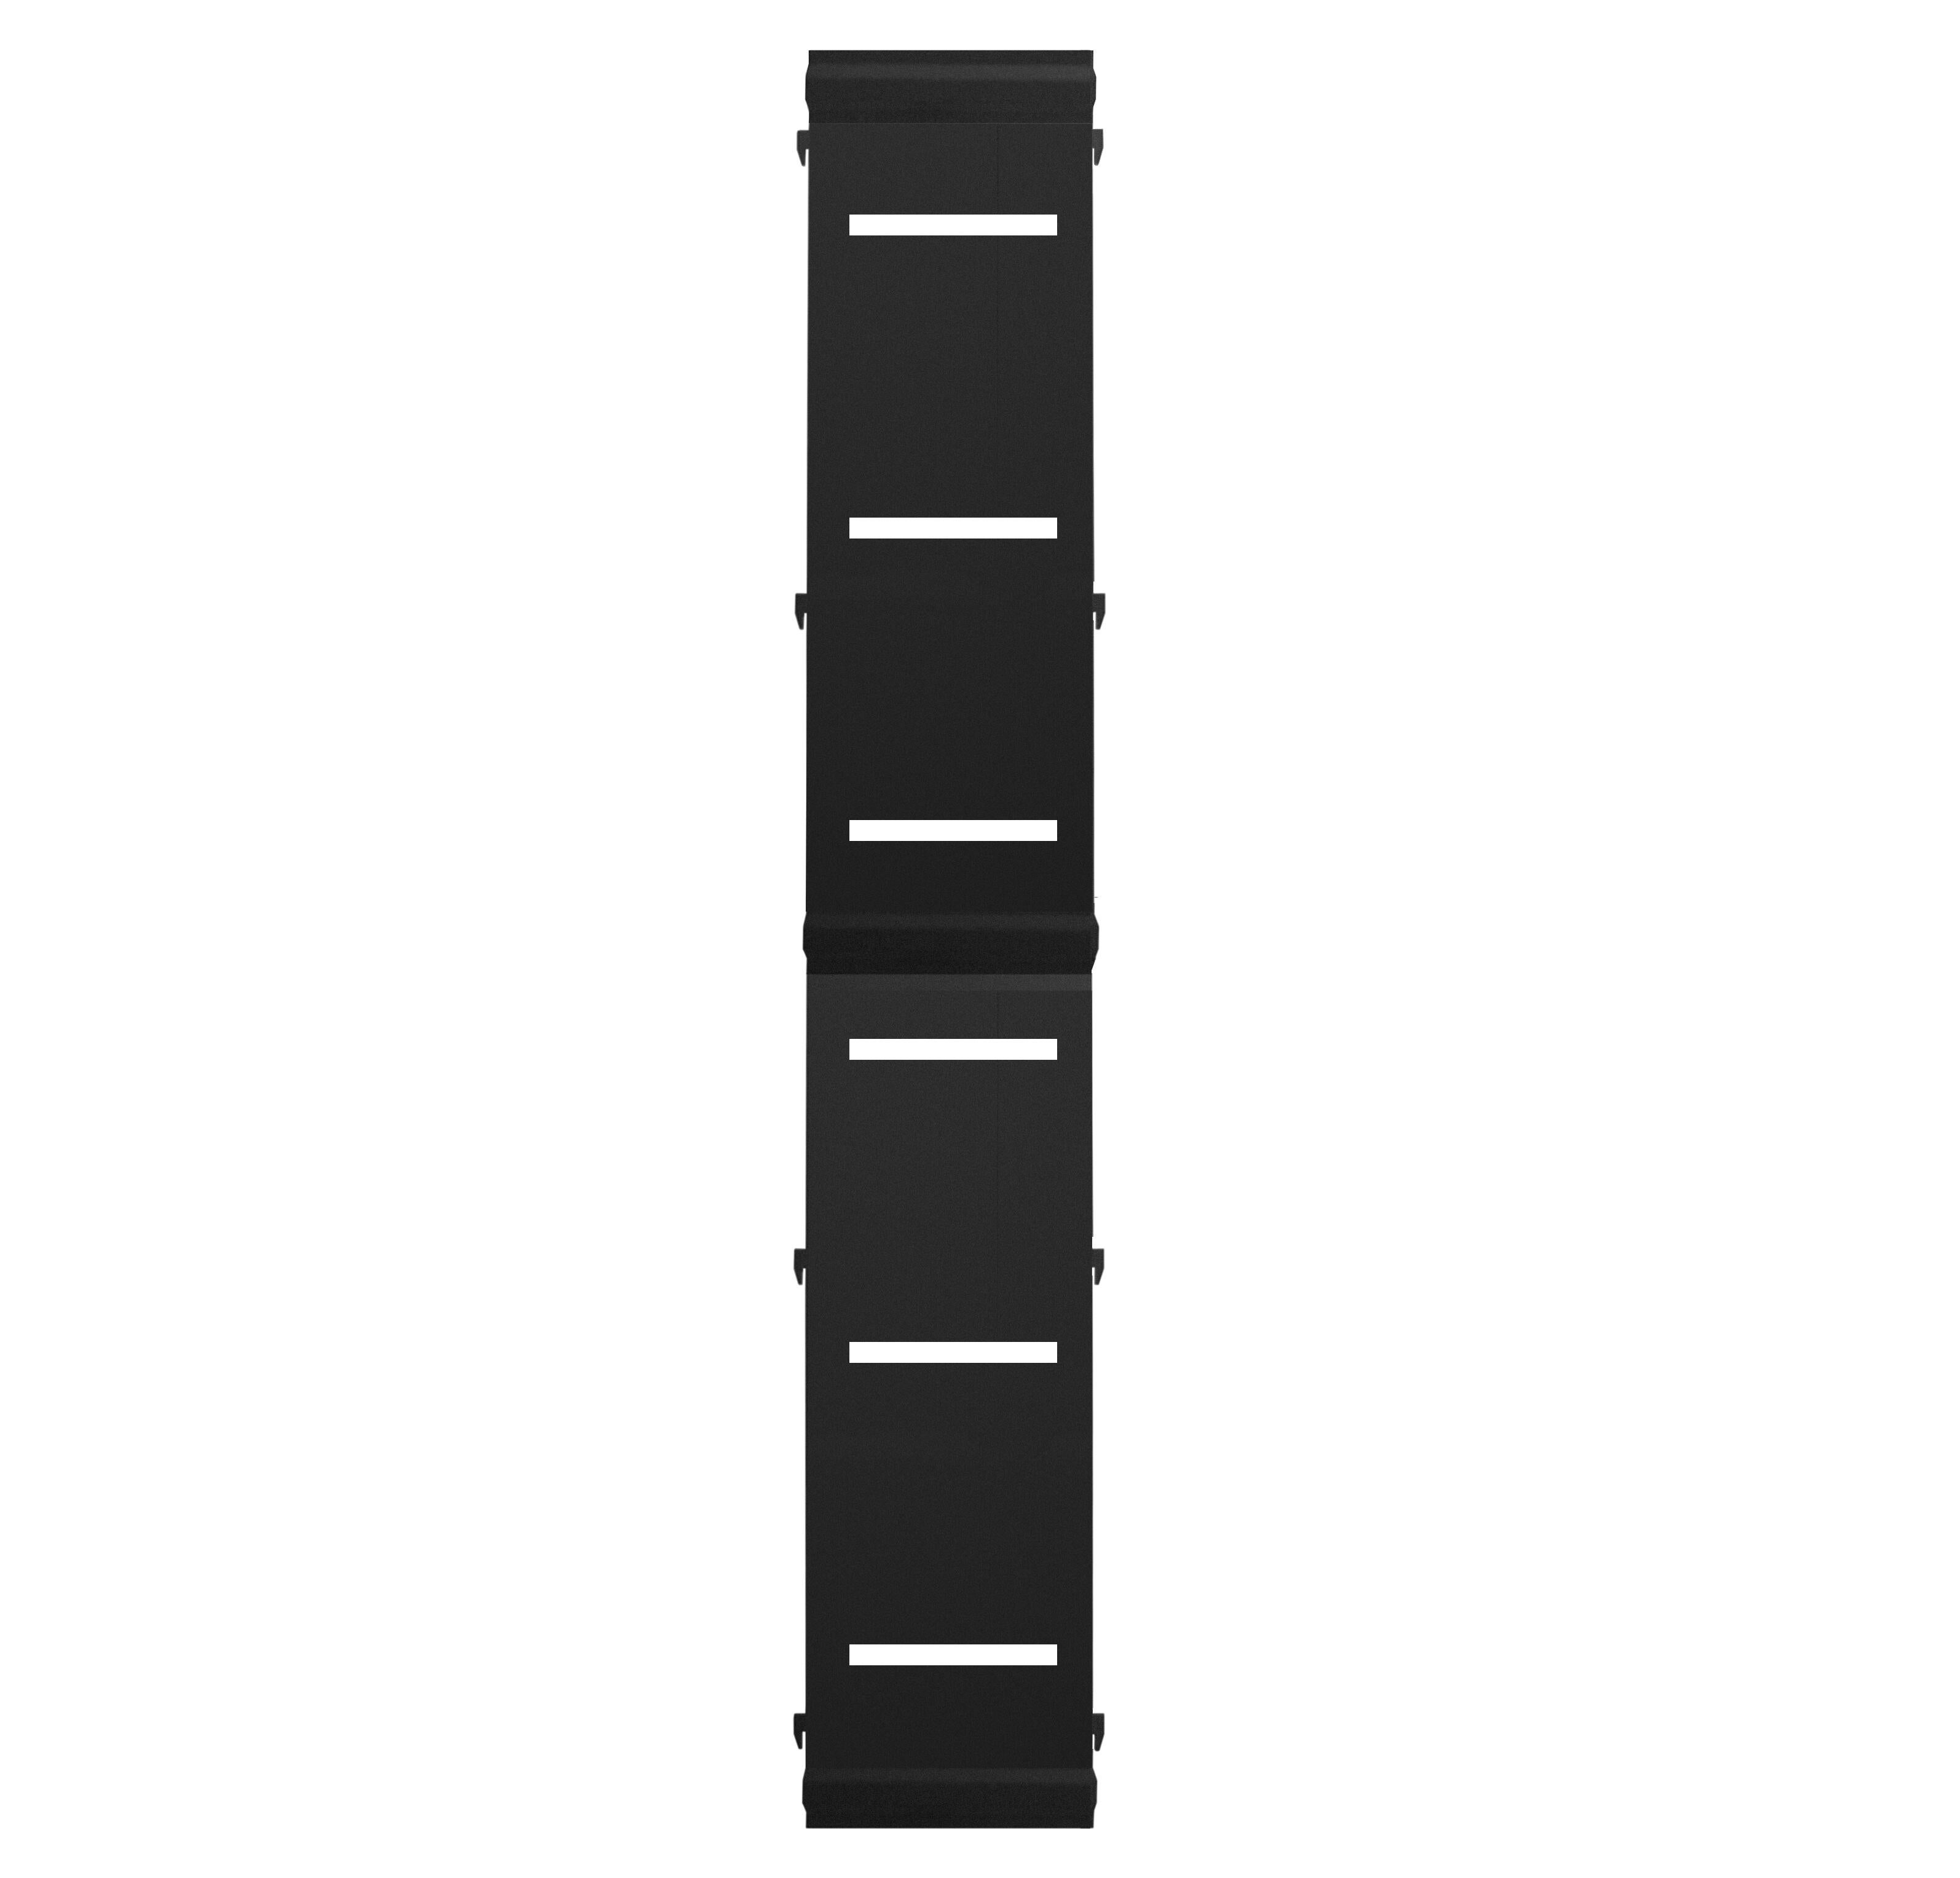 Panel remate valla acero galvanizado franja rayas negro 144x24,5 cm